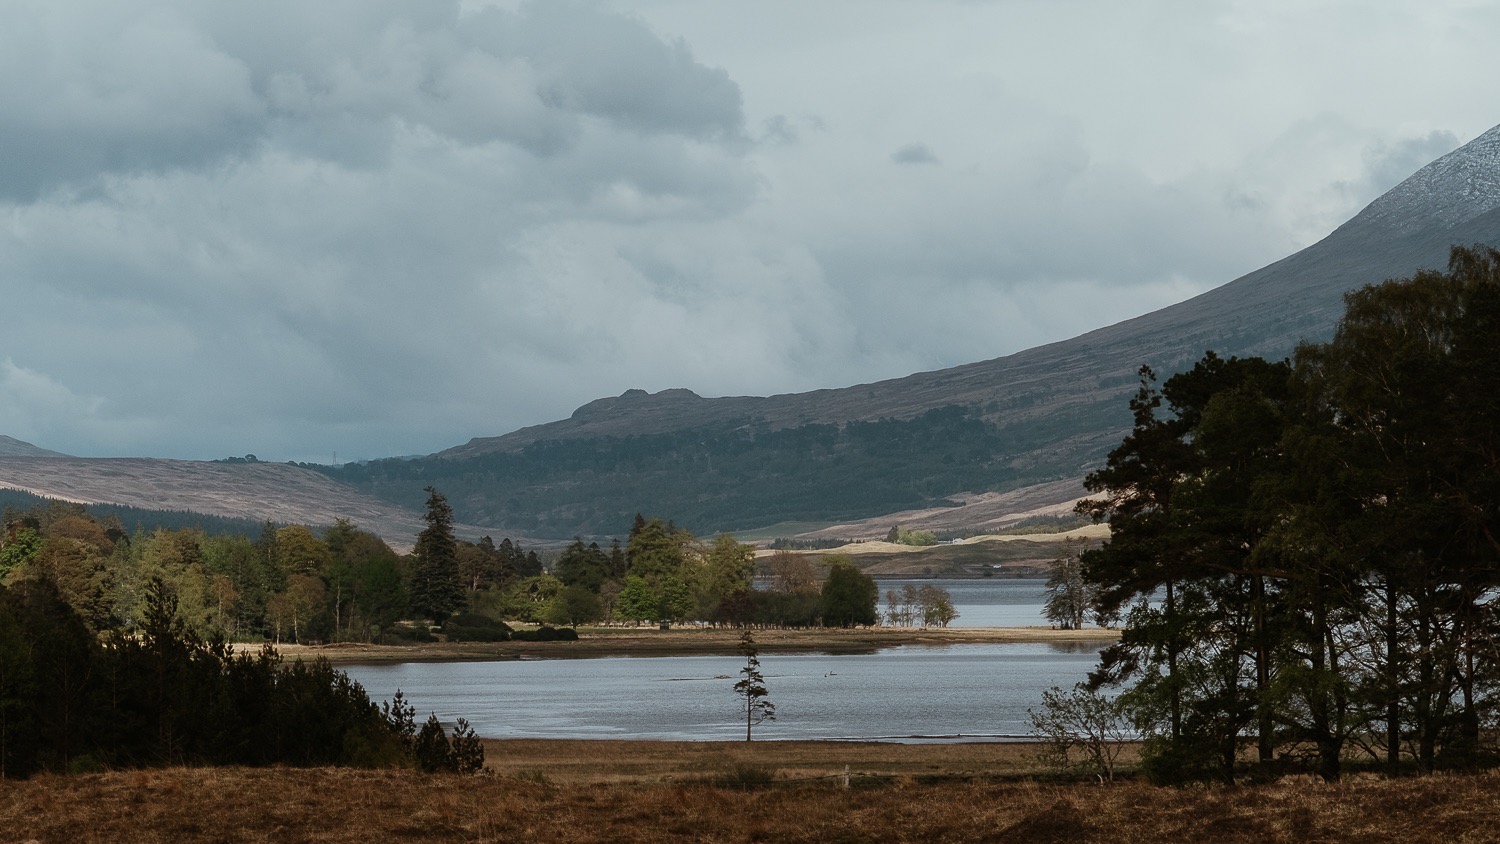 0014-scotland-tamron-le monde de la photo-paysage-20190507174402-compress.jpg